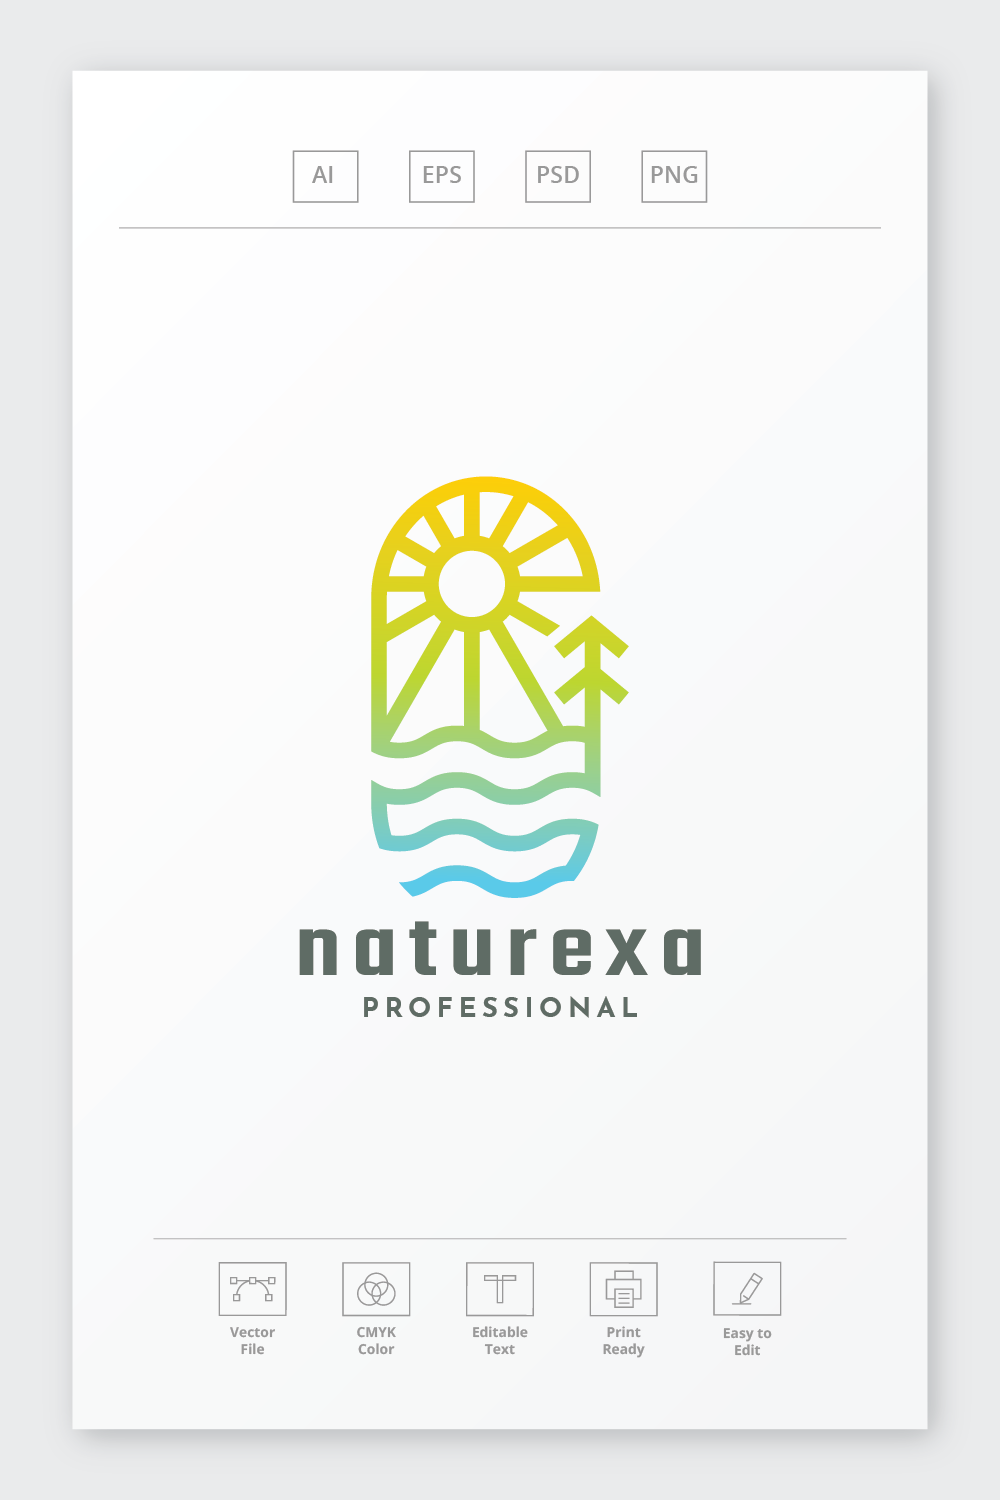 Naturexa Logo pinterest preview image.